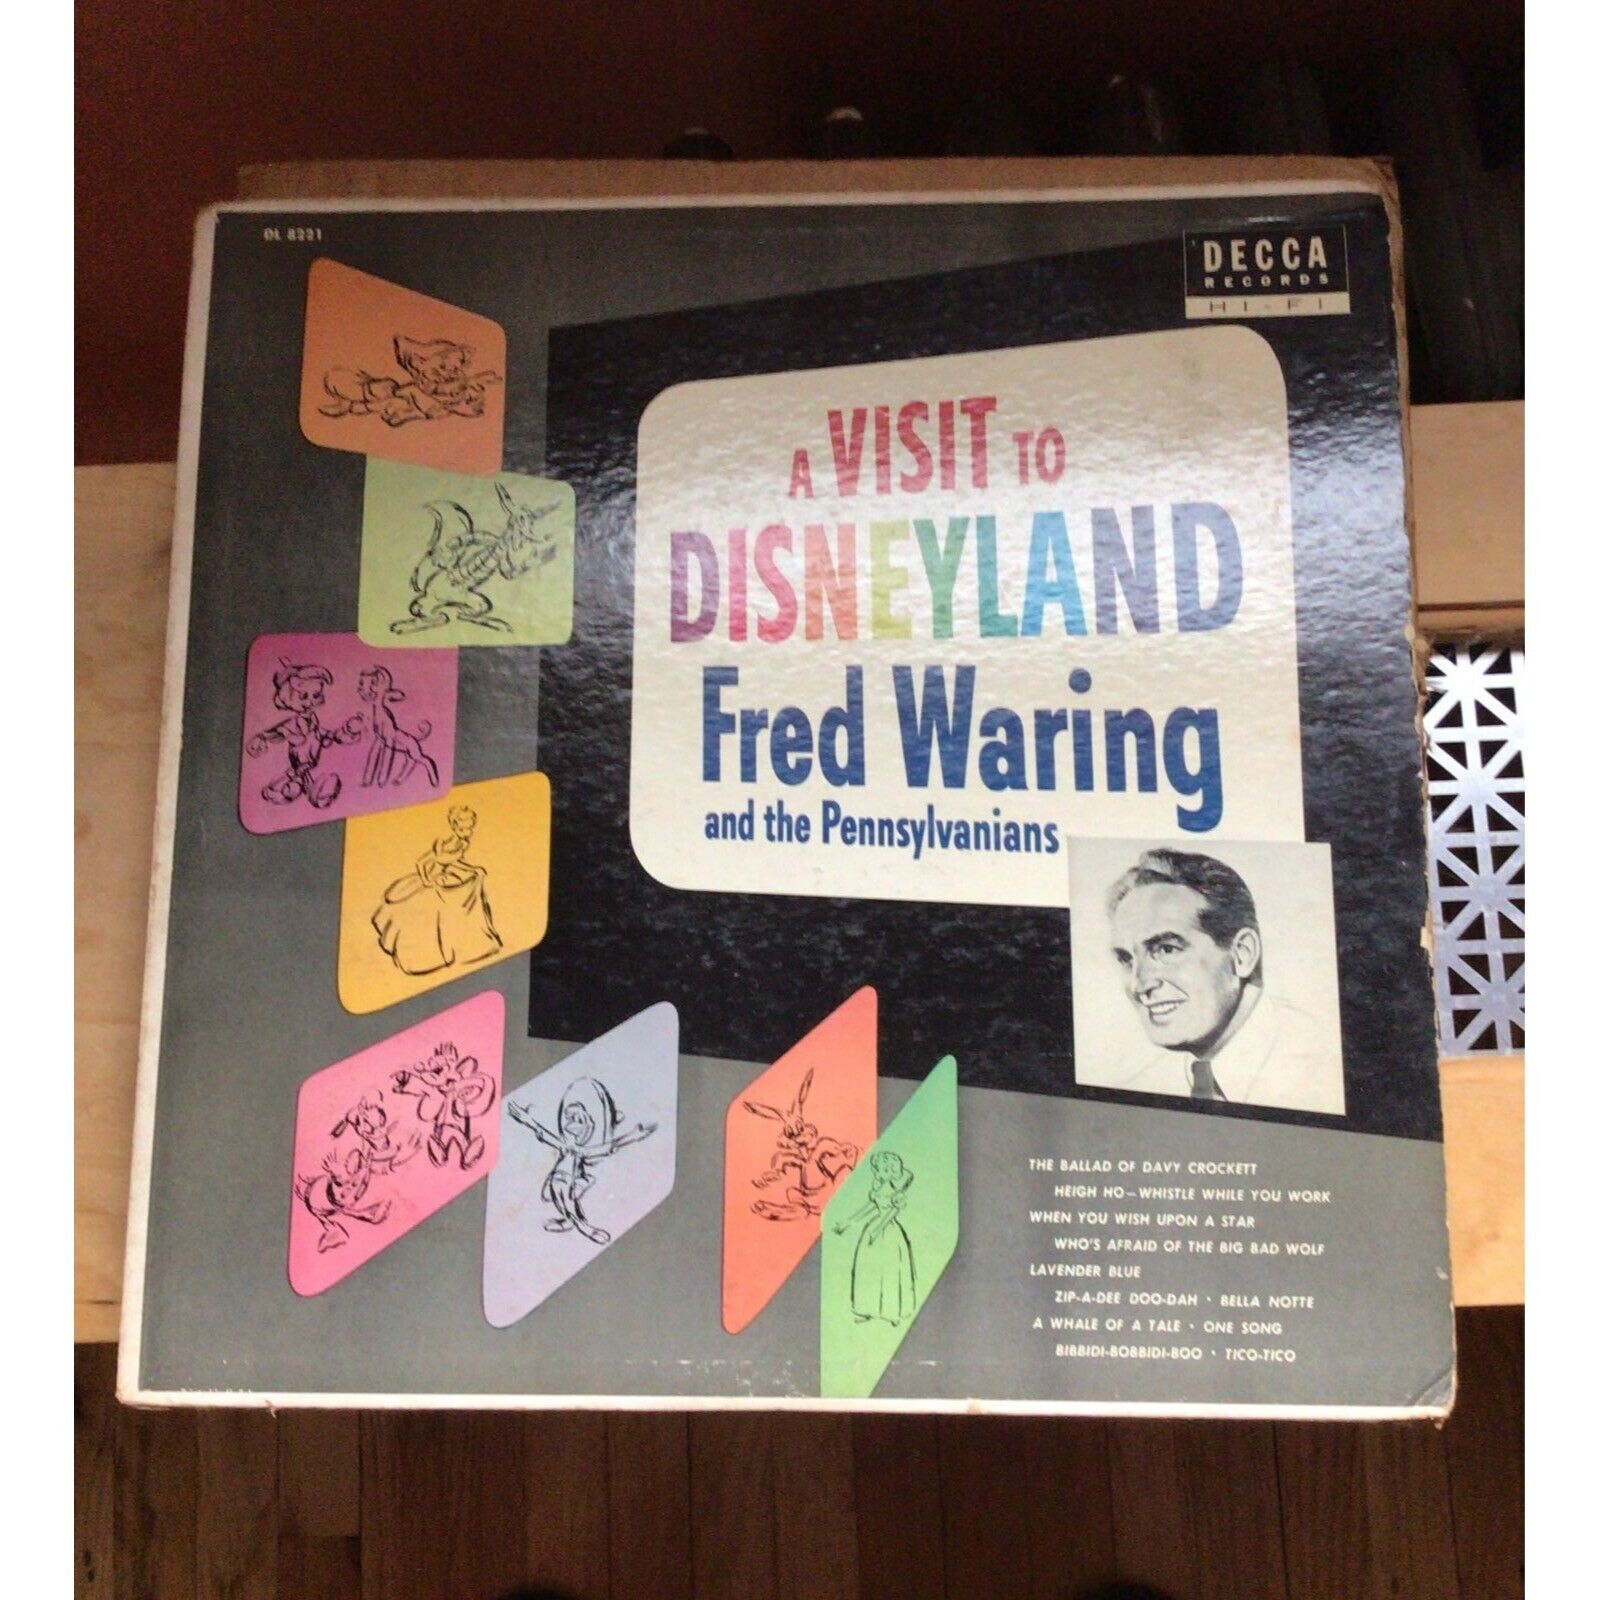 Visit to Disneyland Fred Waring '55 Record Vinyl with Original Mailer Box